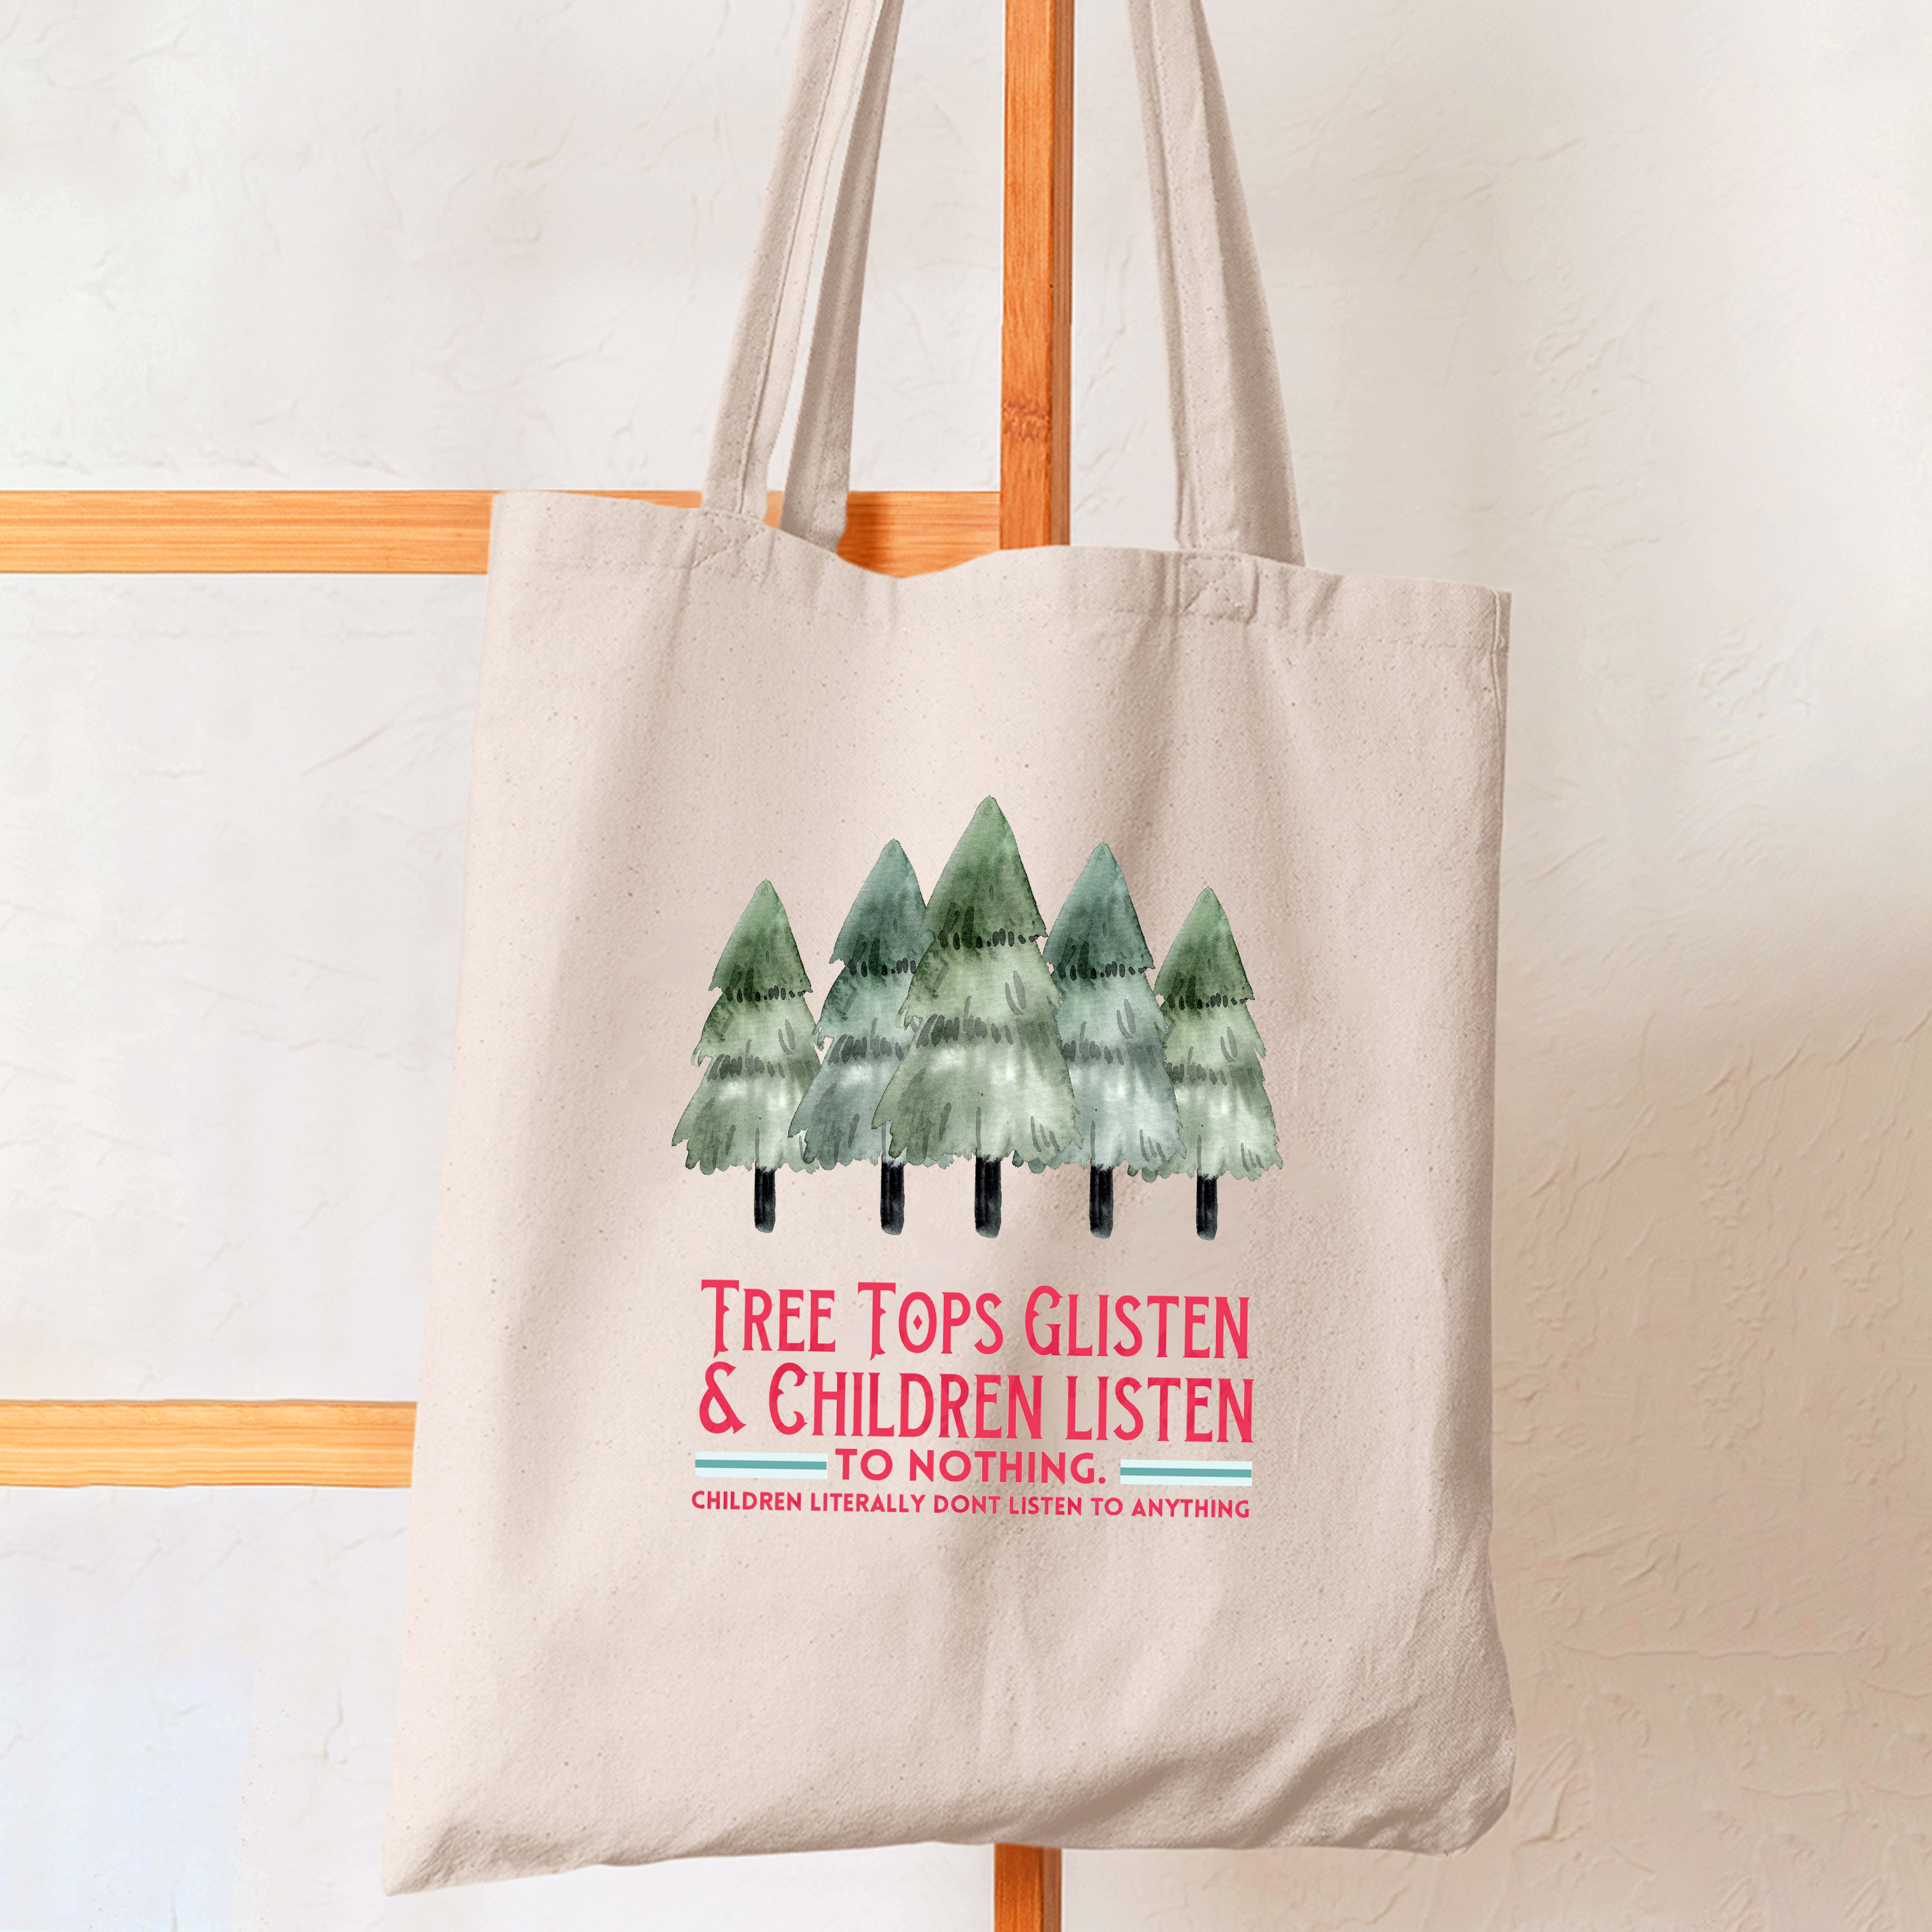 Tree Tops Glisten Christmas Tote Bag